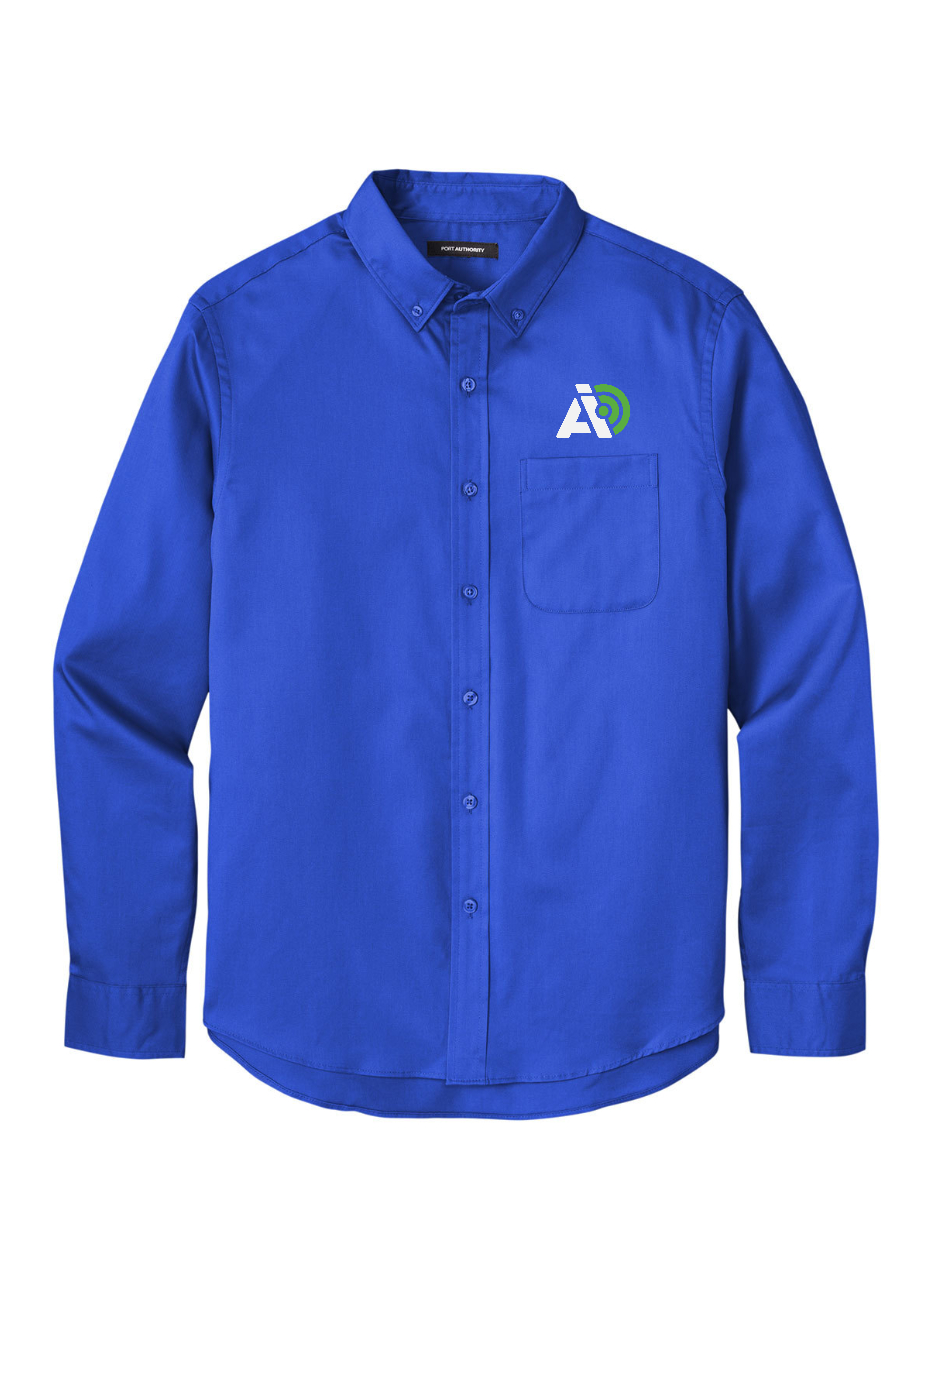 AIO Port Authority Long Sleeve Twill Shirt